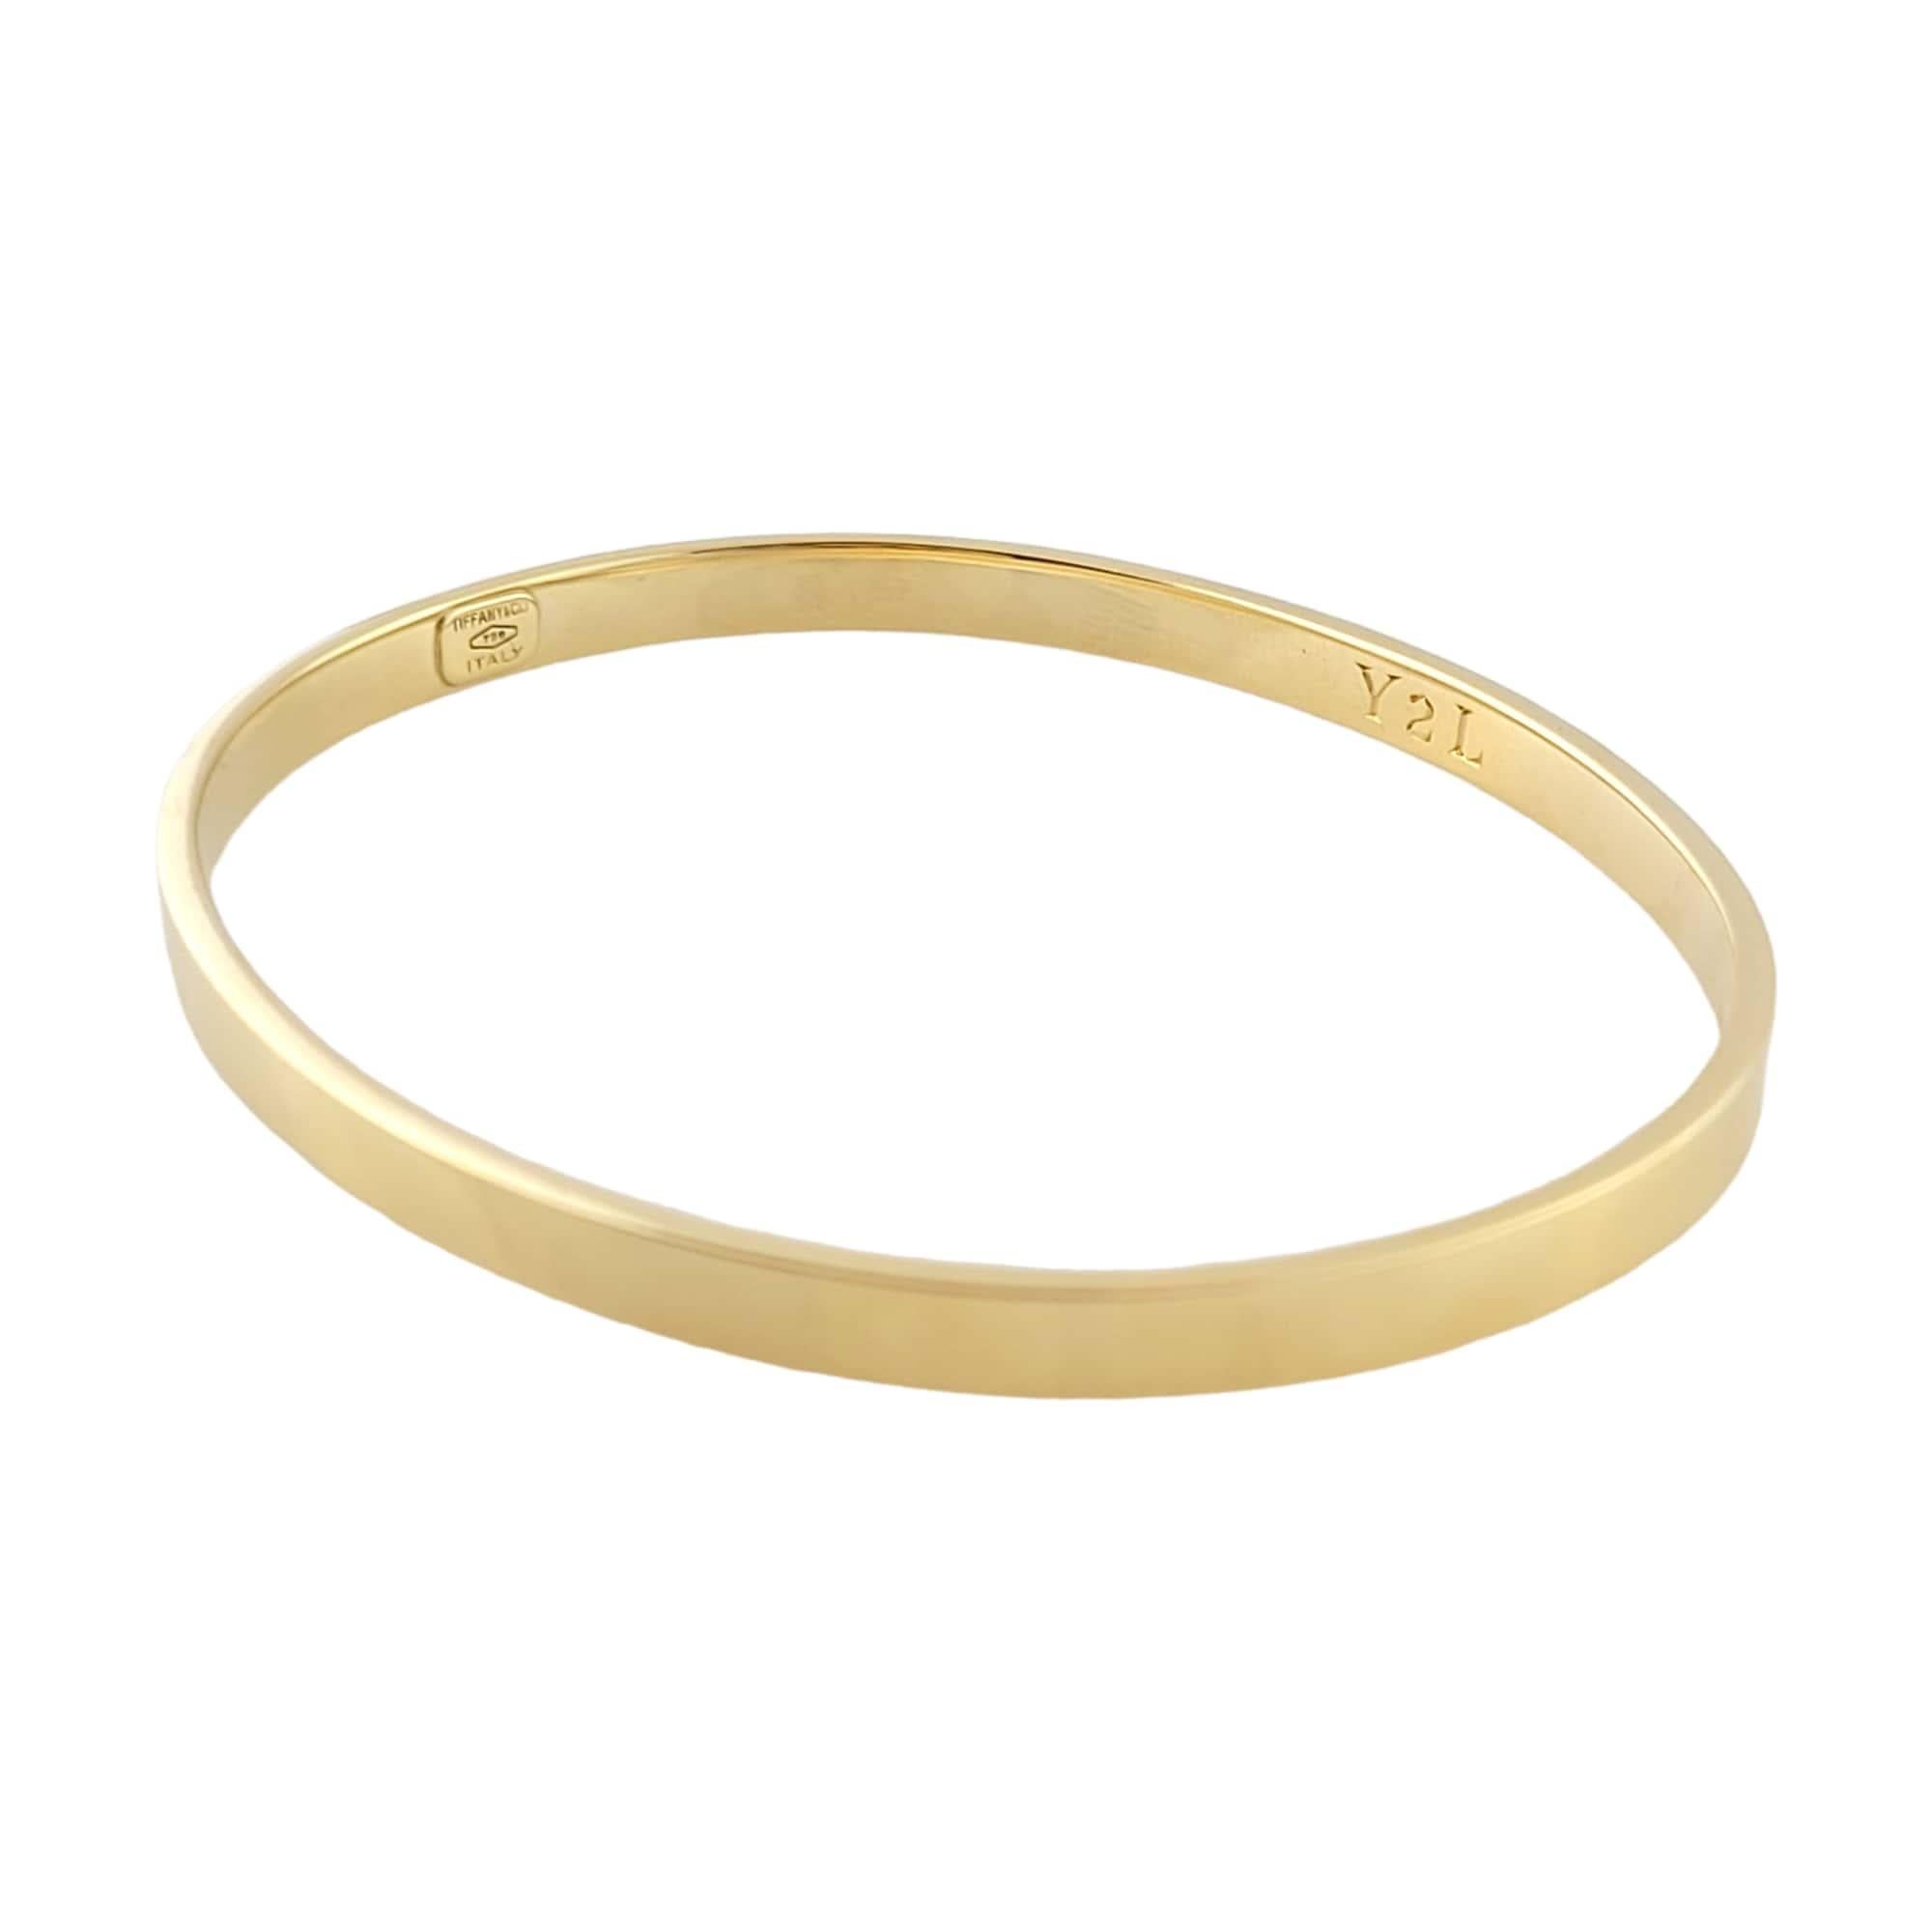 Women's Tiffany & Co. Italy 18K Yellow Gold Oval Bangle Bracelet